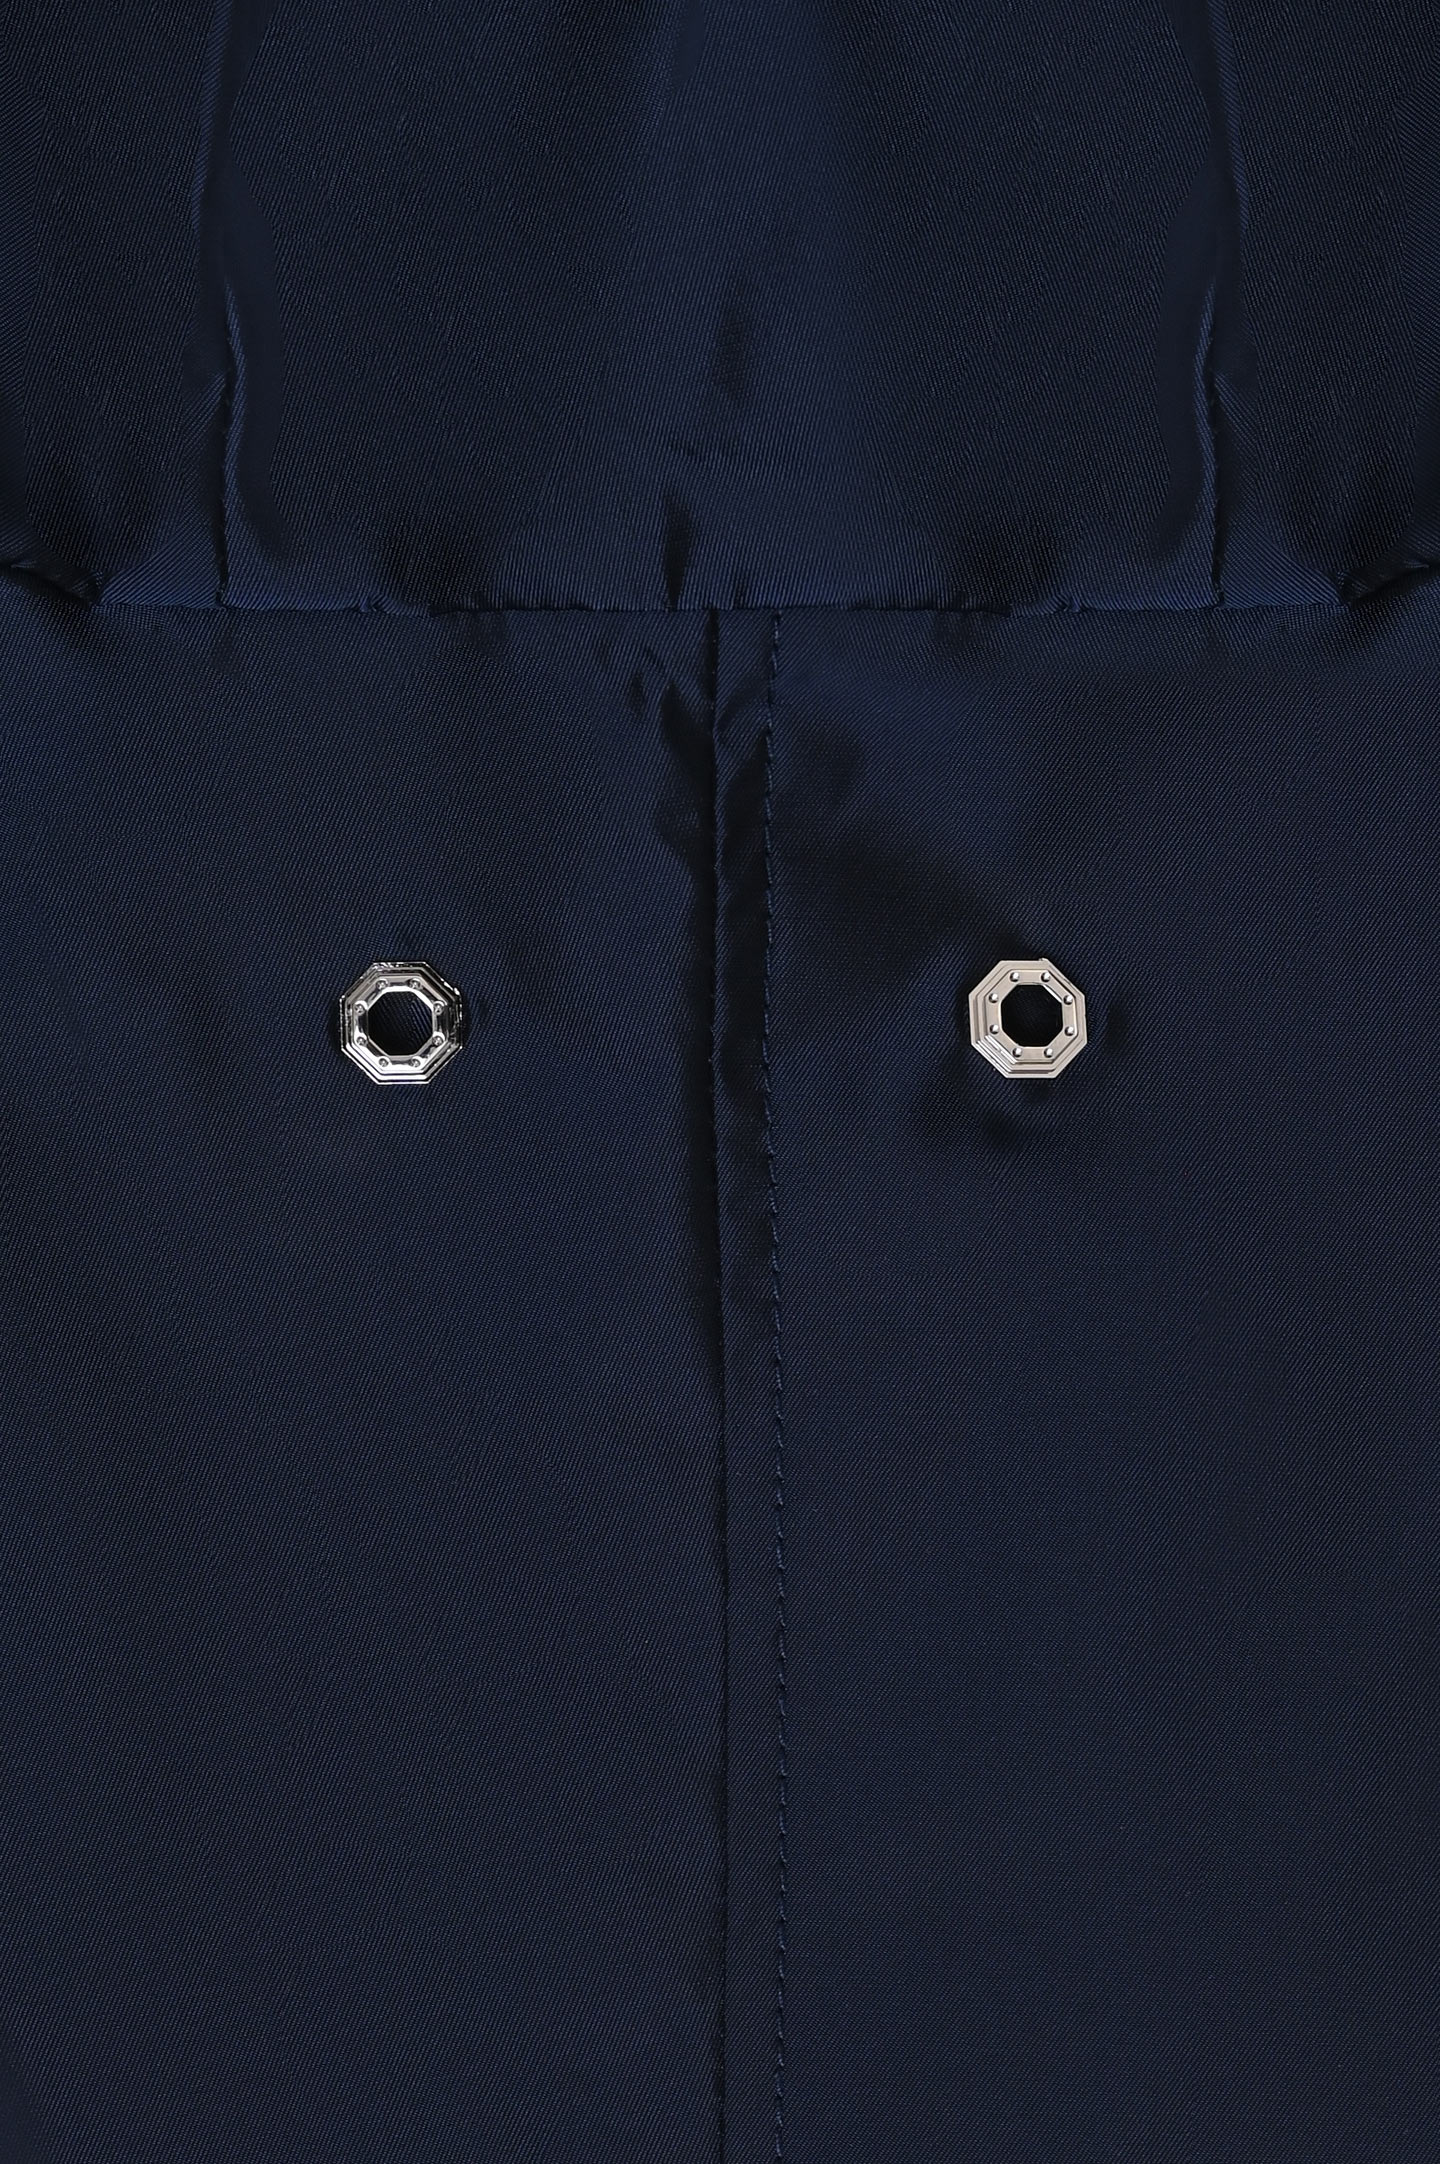 Куртка STEFANO RICCI MDJ2100110 PA001L, цвет: Синий, Мужской